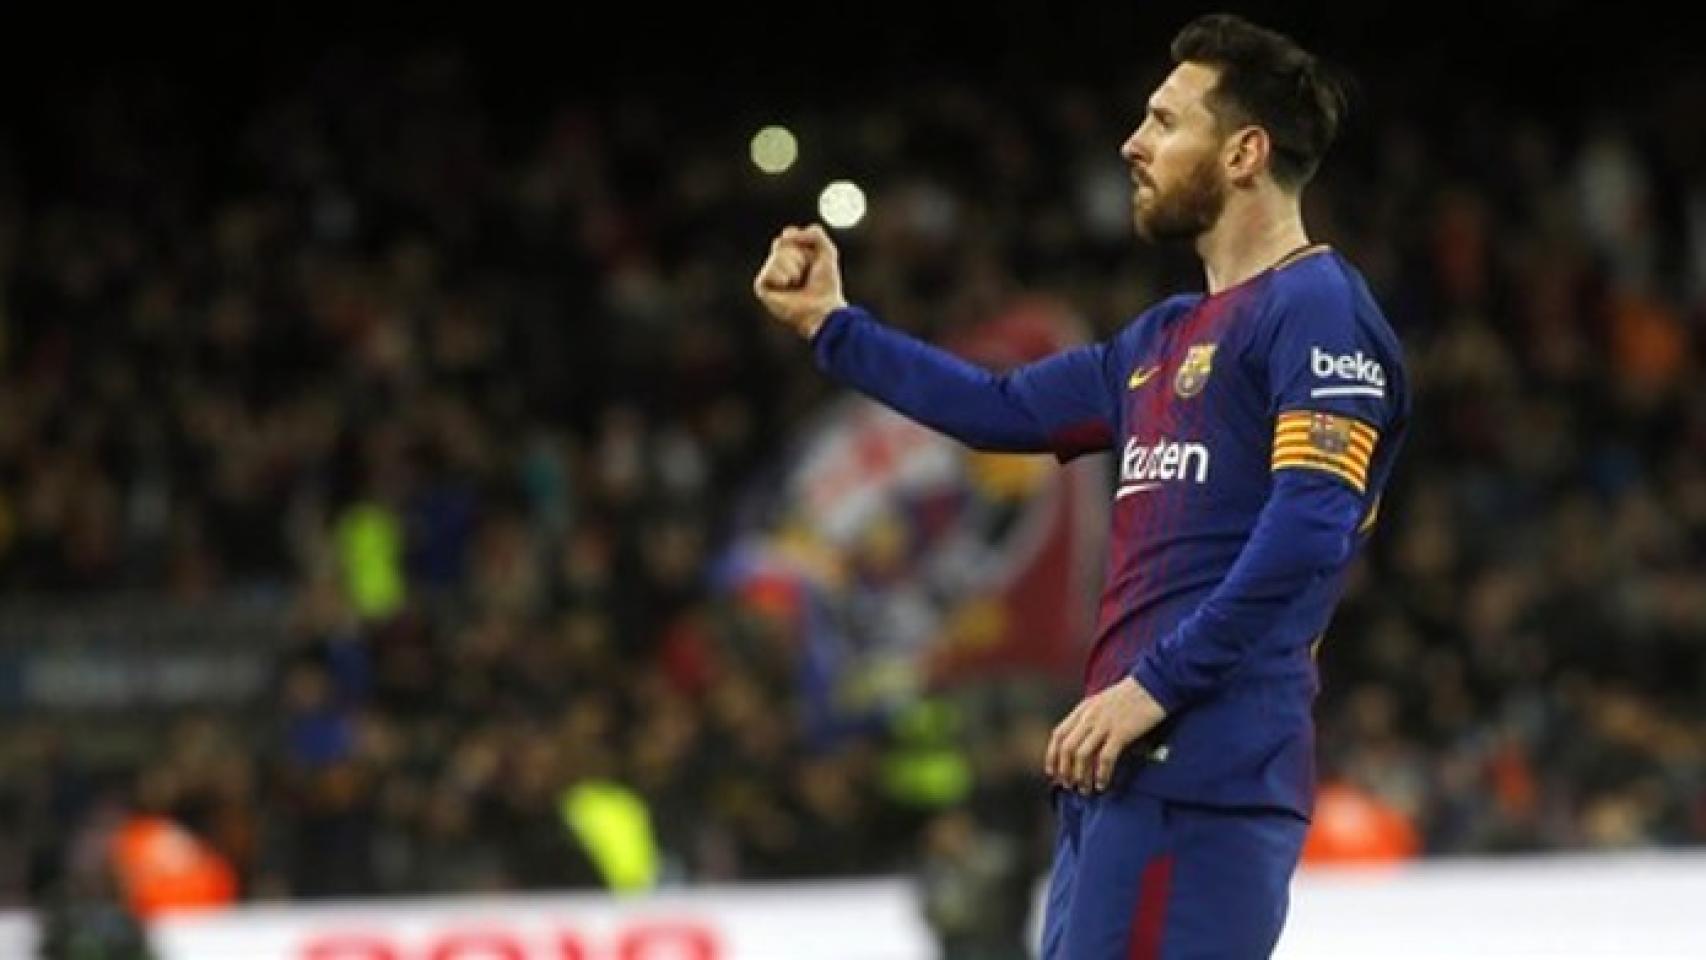 Messi celebra un gol con el Barcelona. Foto fcbarcelona.com